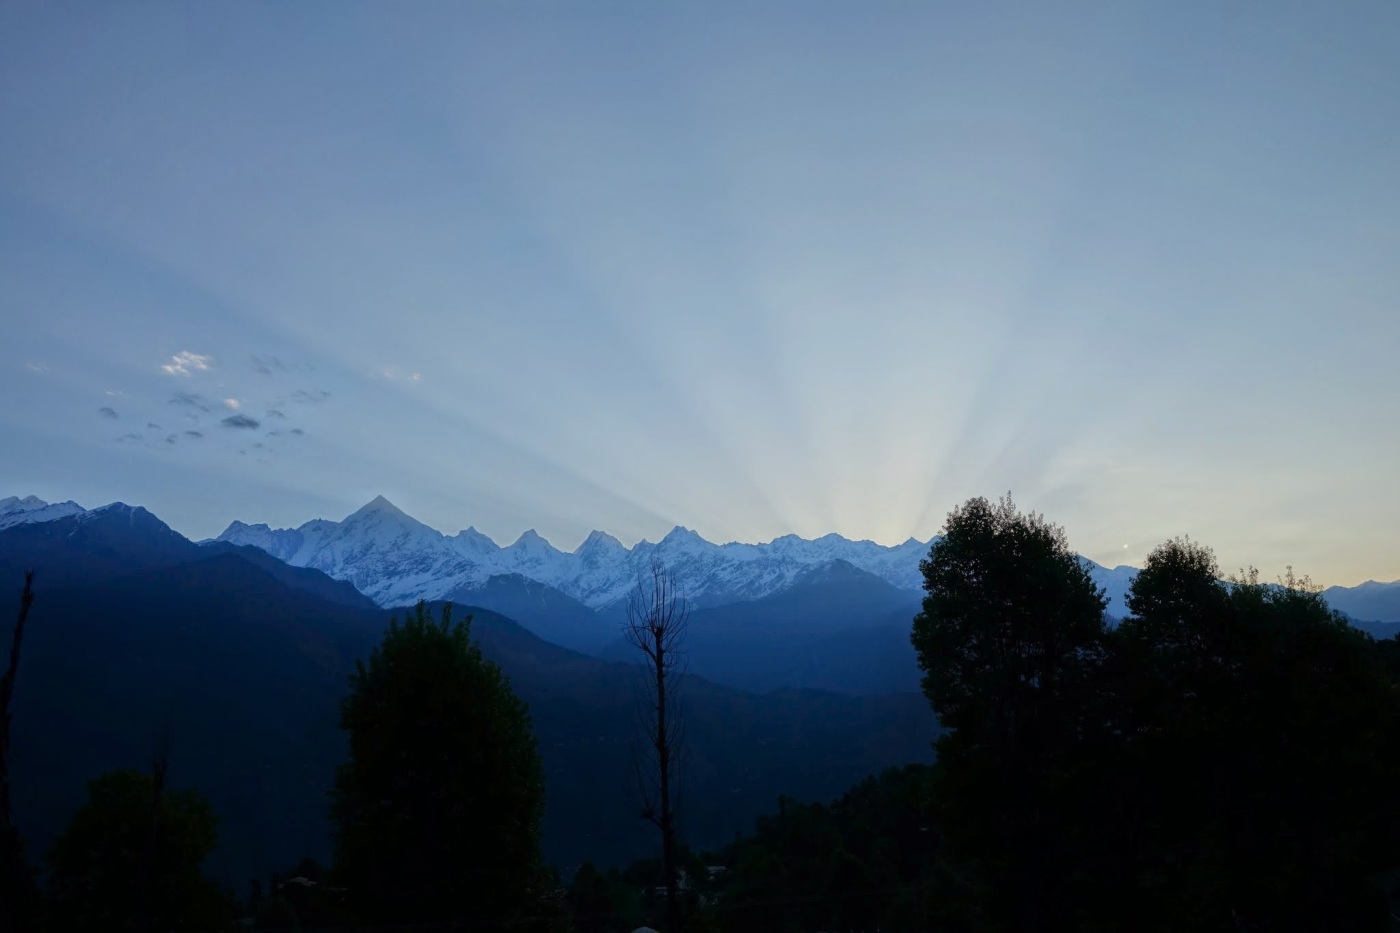 Himalayan peaks